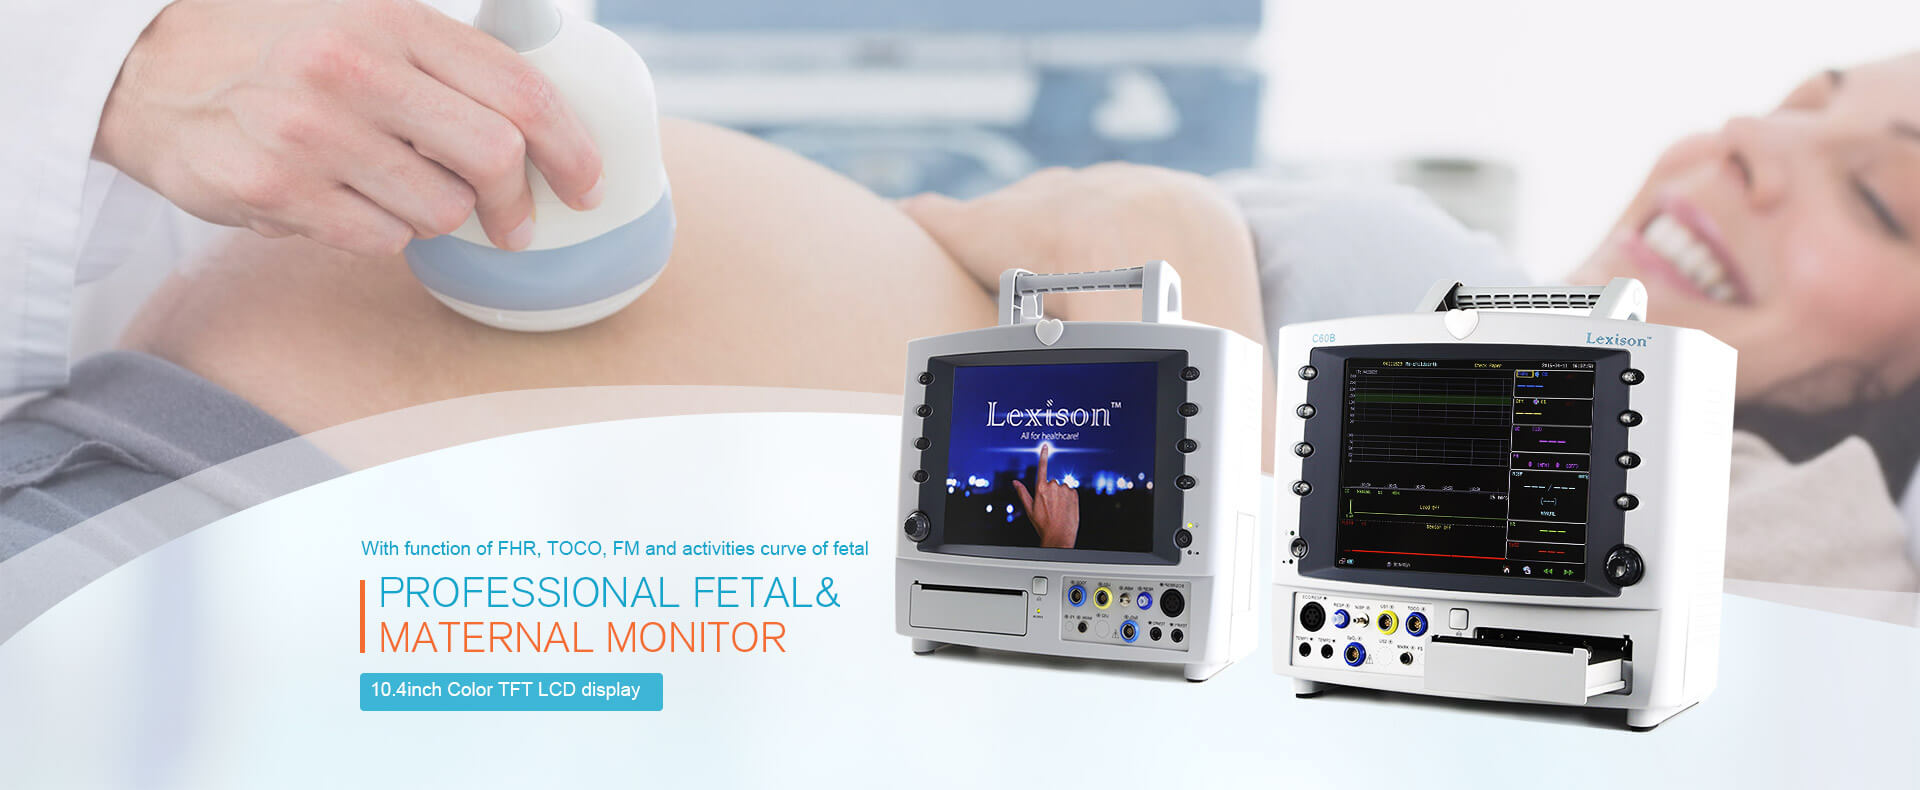 Professional Fetal&Maternal Monitor